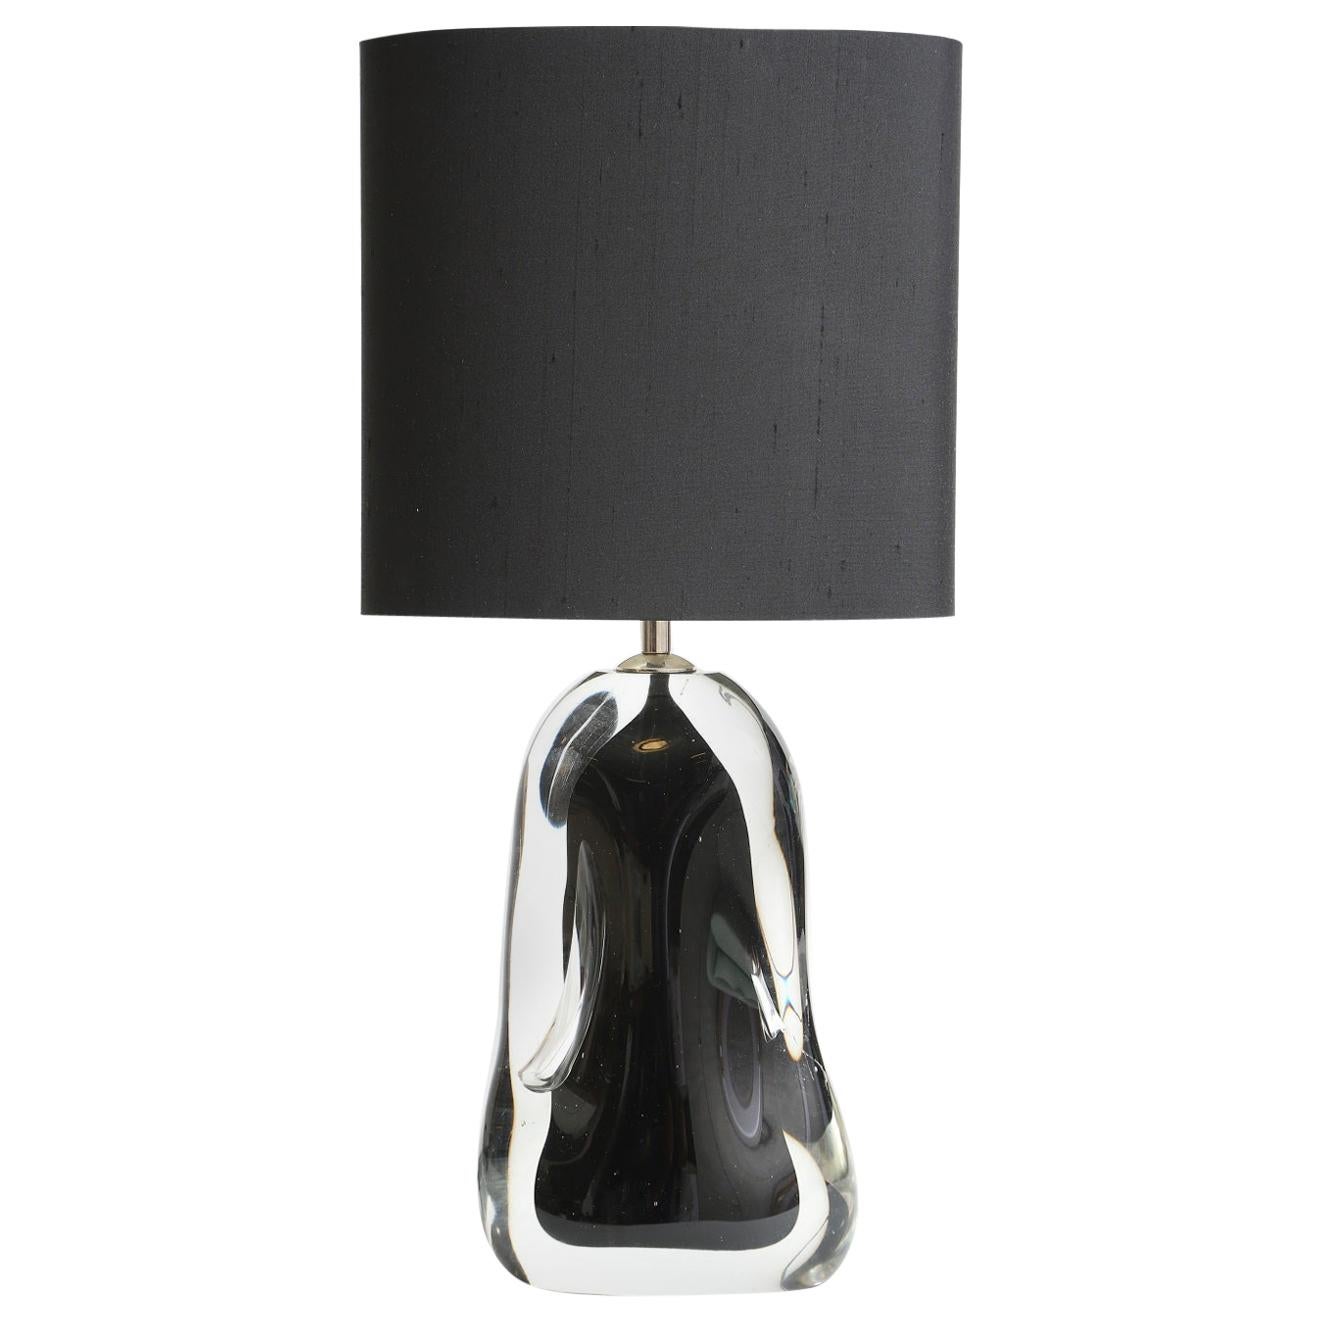 Perfume Bottle Table Lamp in Black by Porta Romana For Sale at 1stDibs |  porta romana perfume bottle lamp, porta romana lamps, porta romana sale